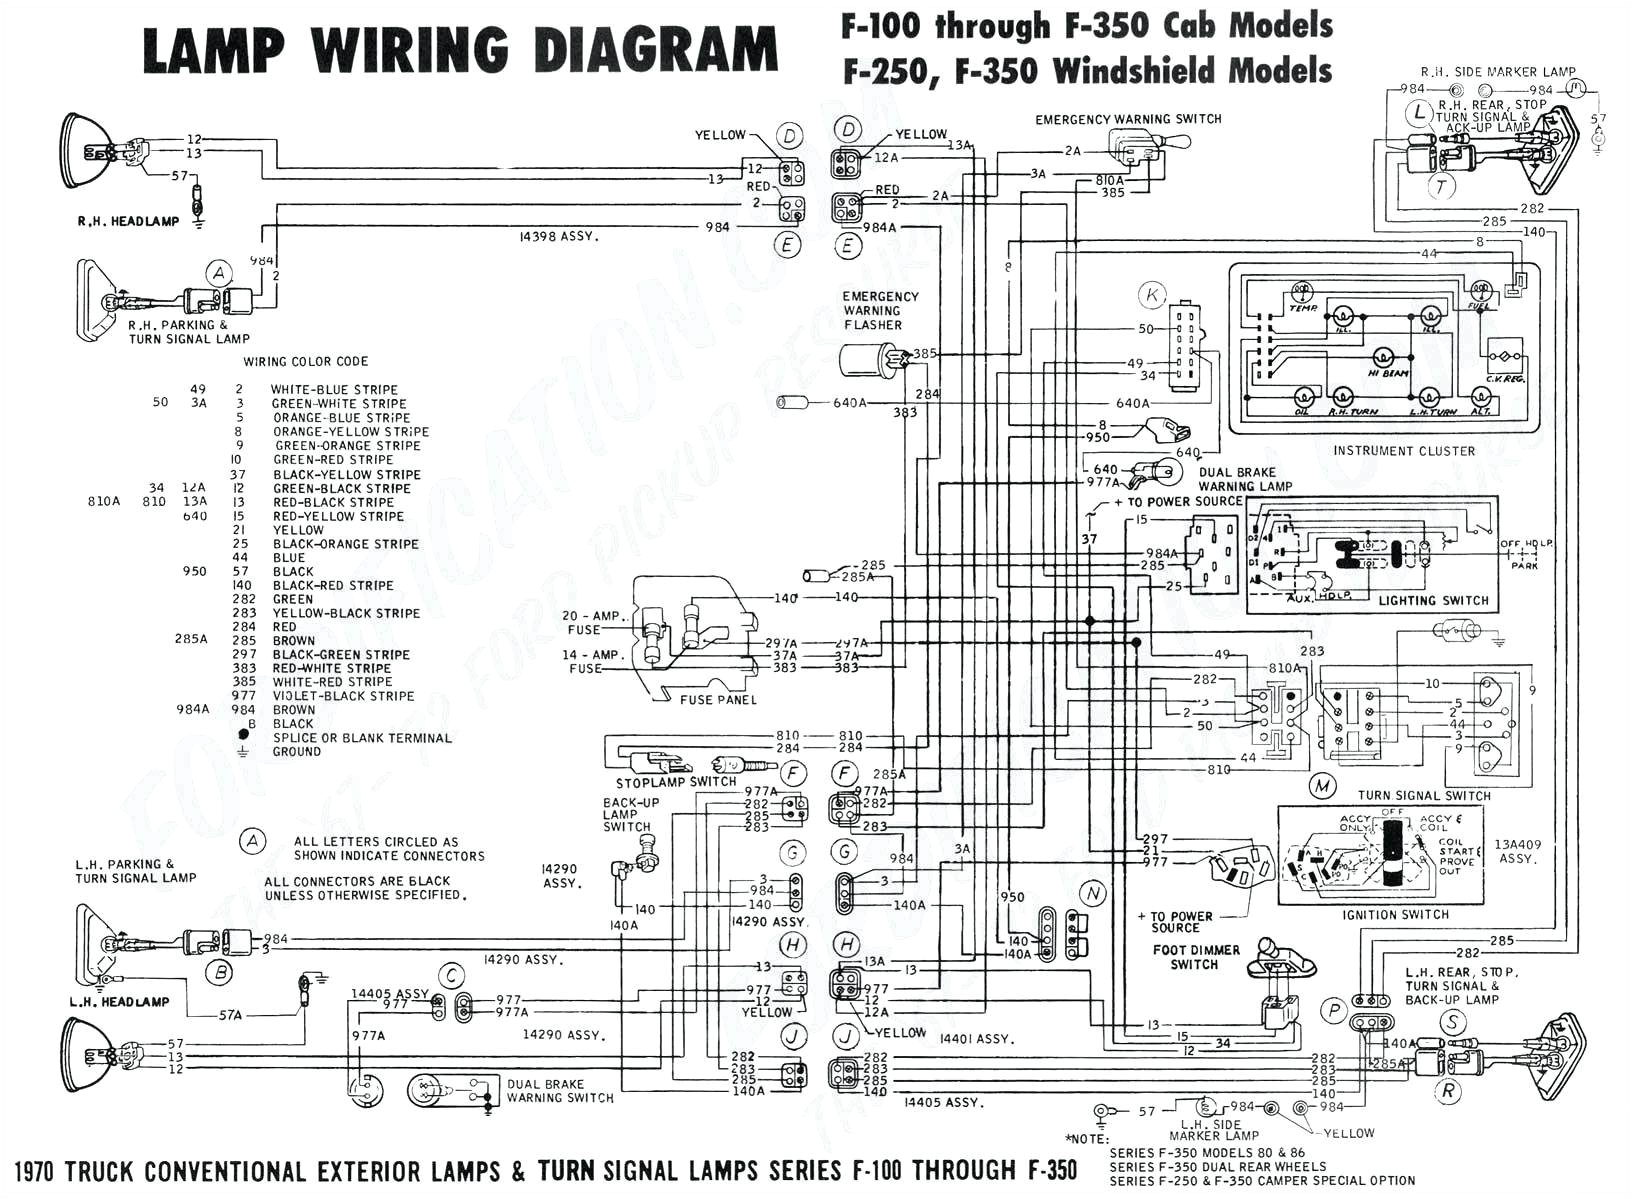 honda fit wiring diagram wiring diagram datasource honda fit wiring diagram pdf